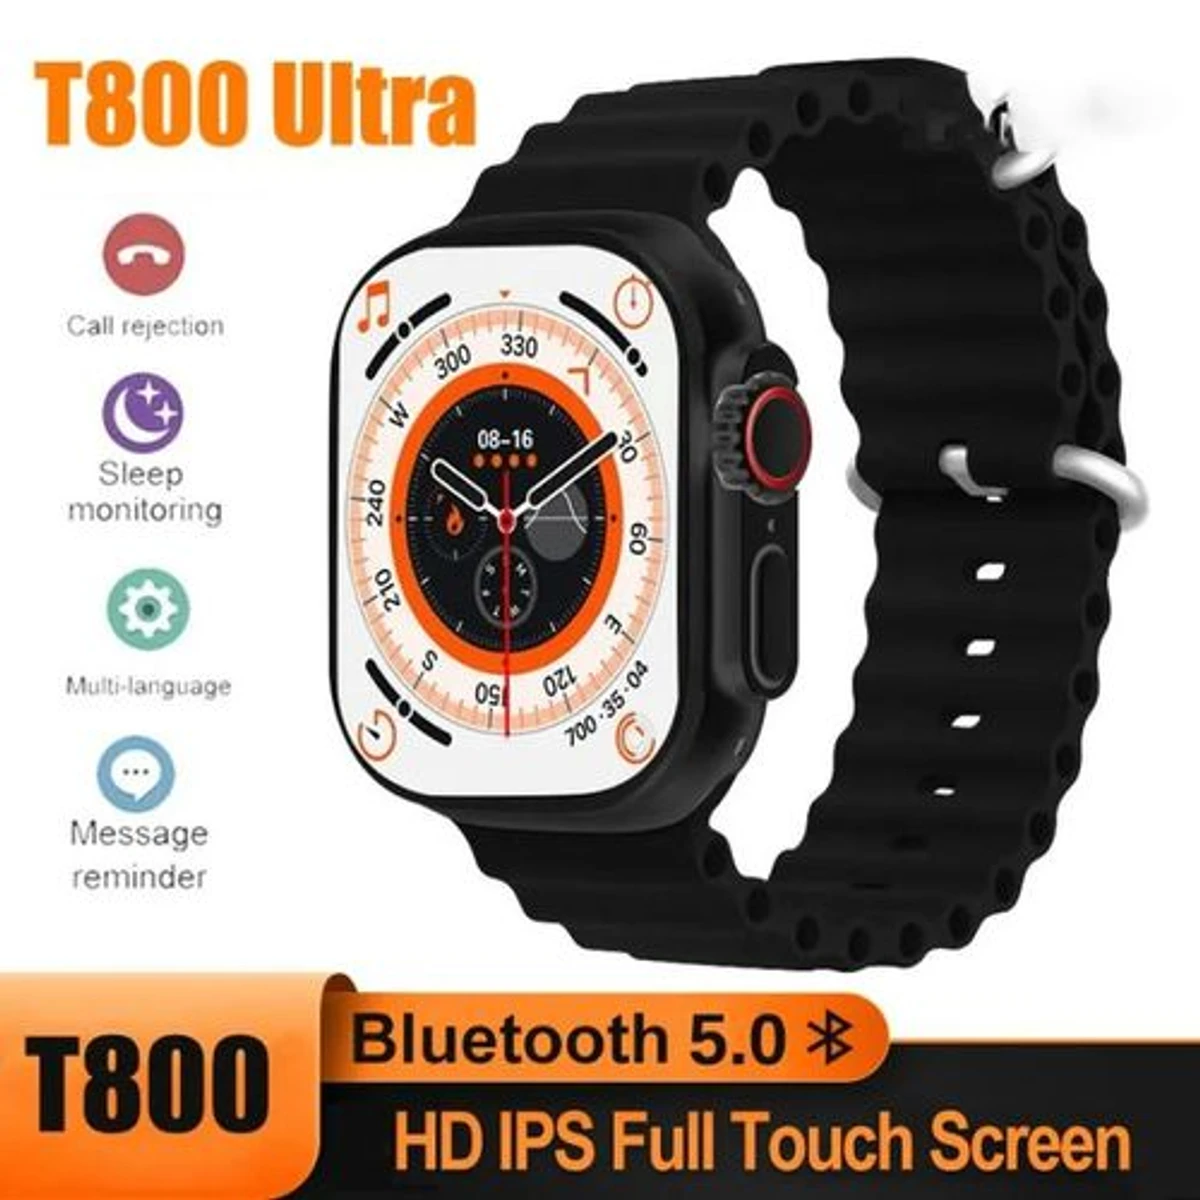 (⭐⭐⭐Black)T800 Ultra Smart Watche 1.9 inch display